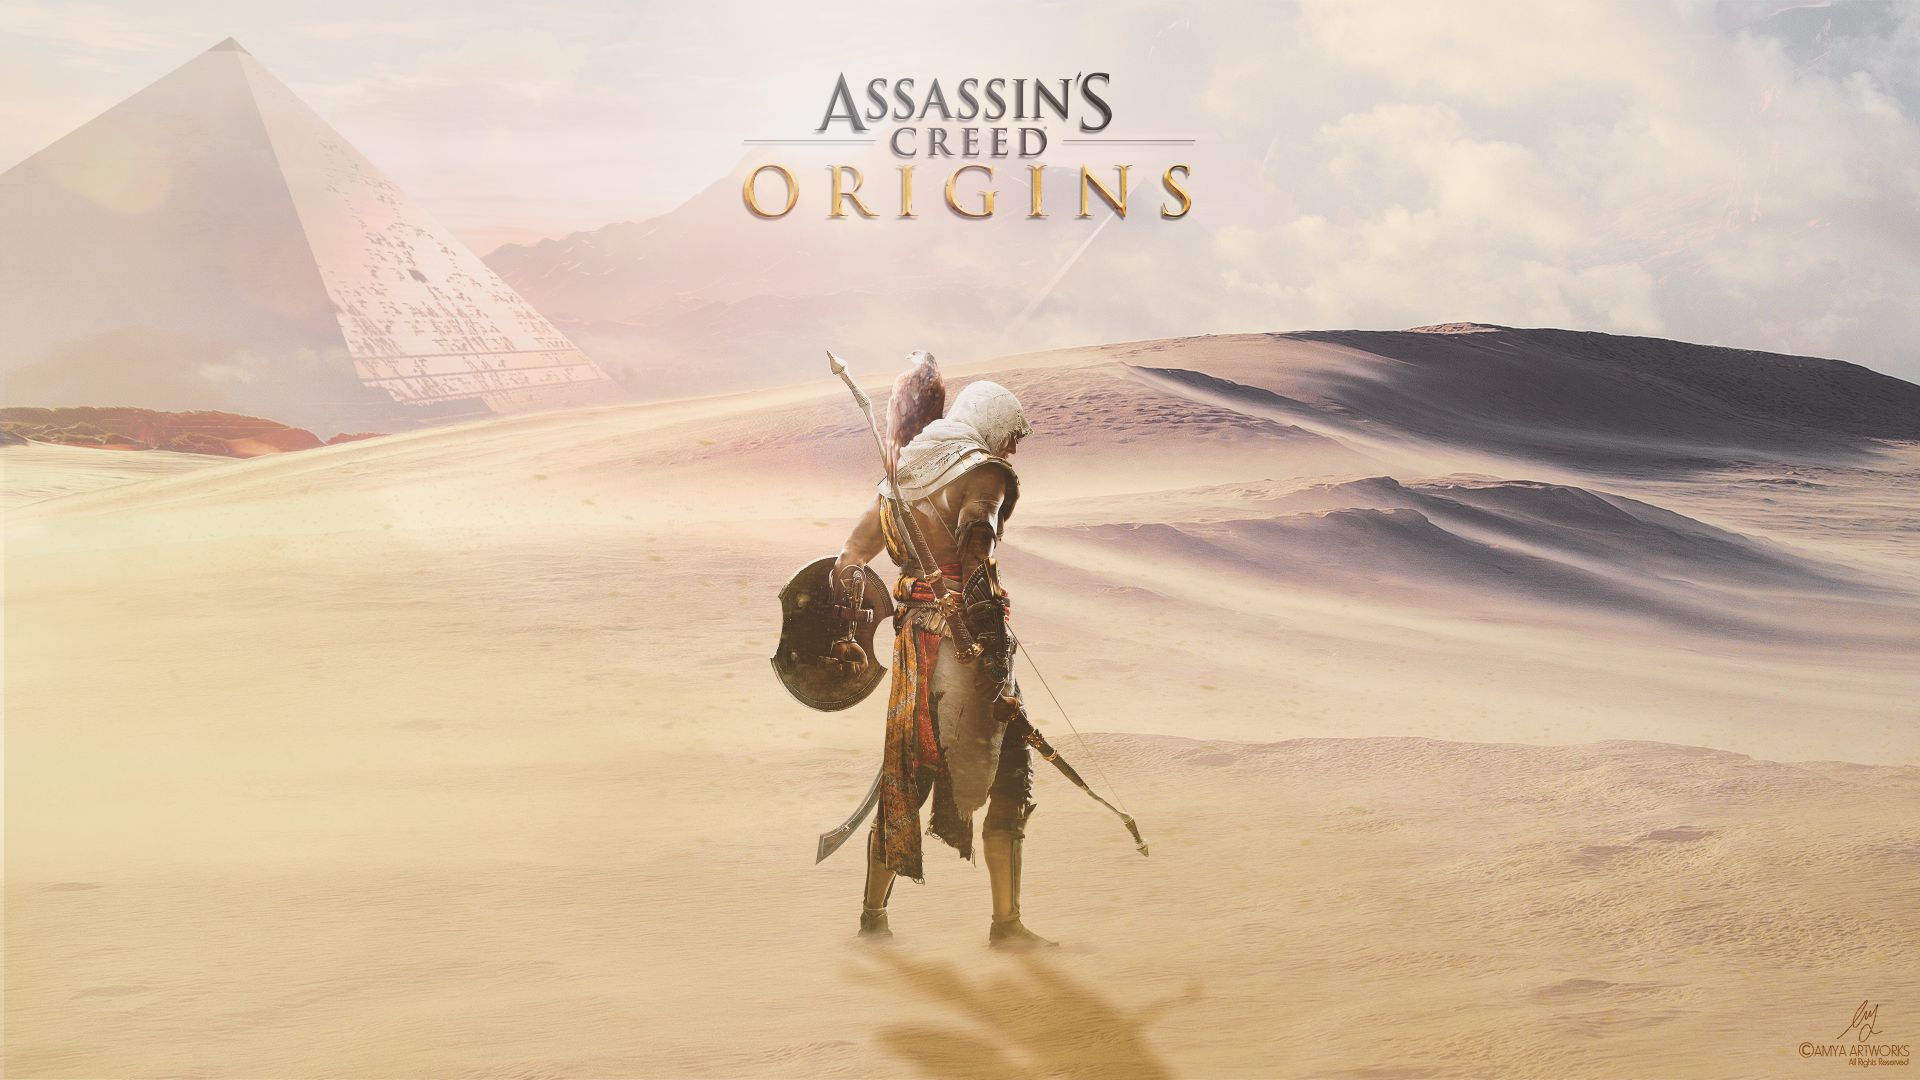 Wallpaper Assassin's Creed Origins, warrior, desert, video game